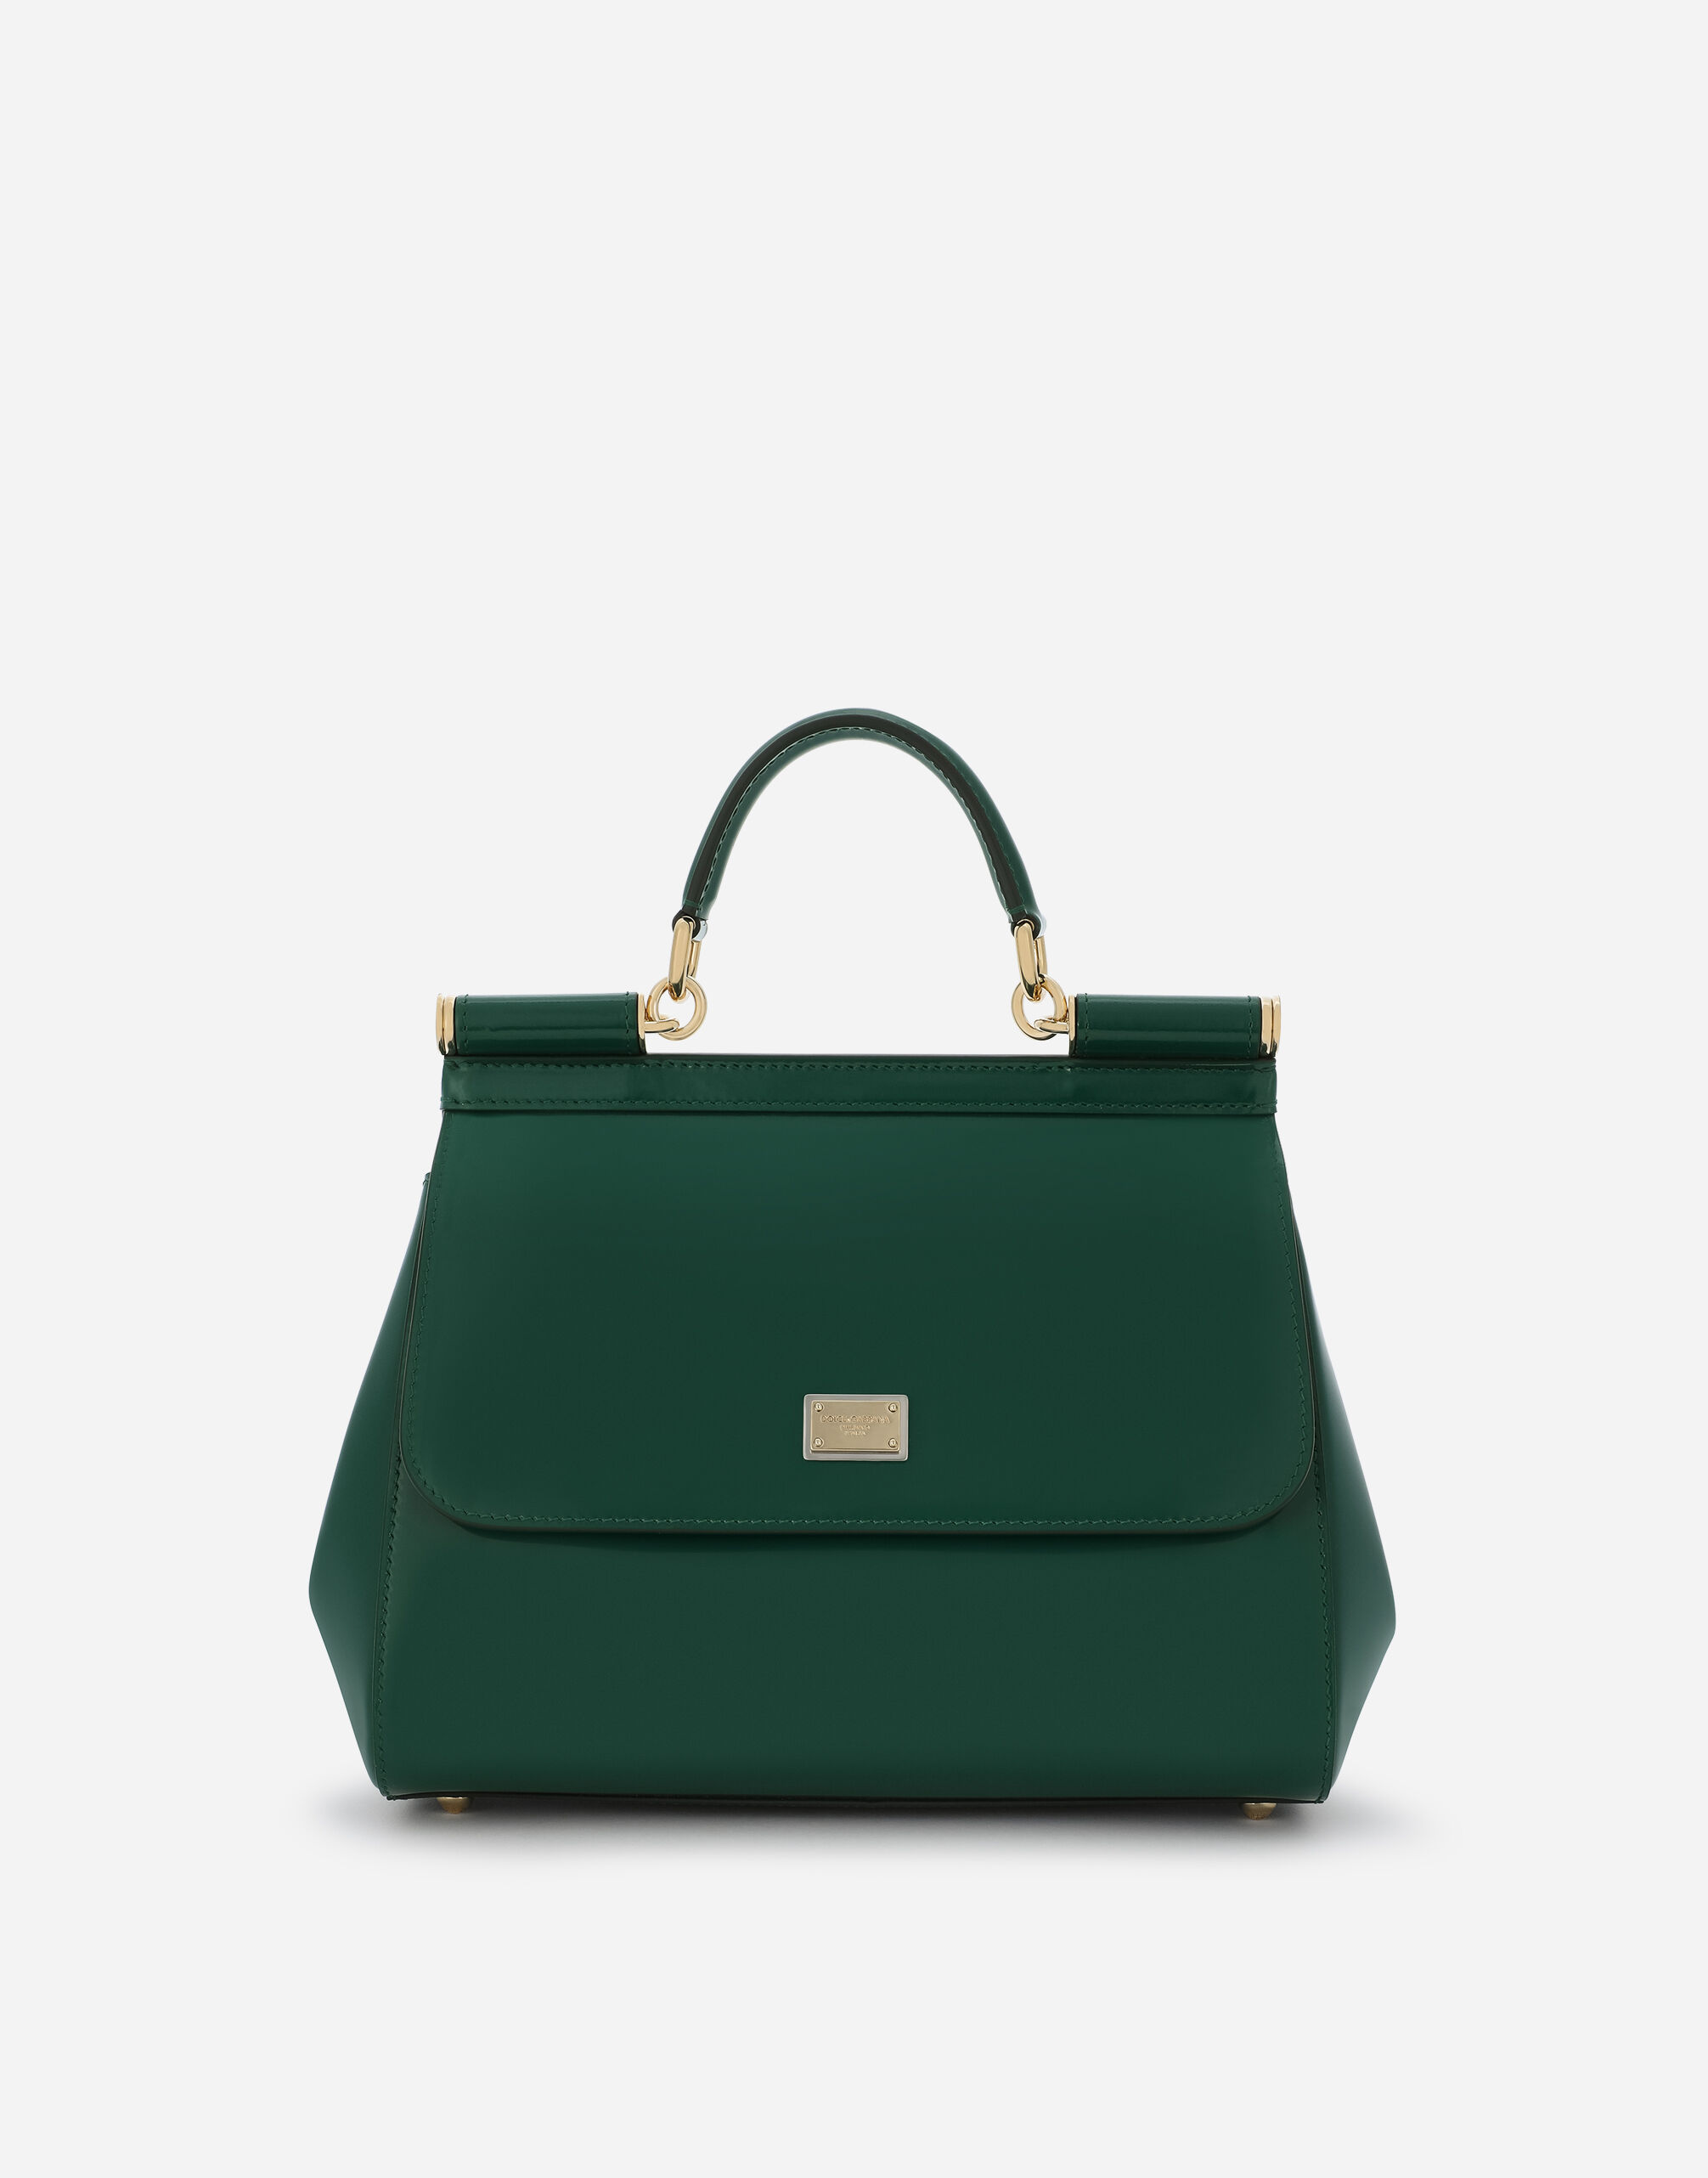 Dolce&Gabbana Silver Women's Handbags | Neiman Marcus